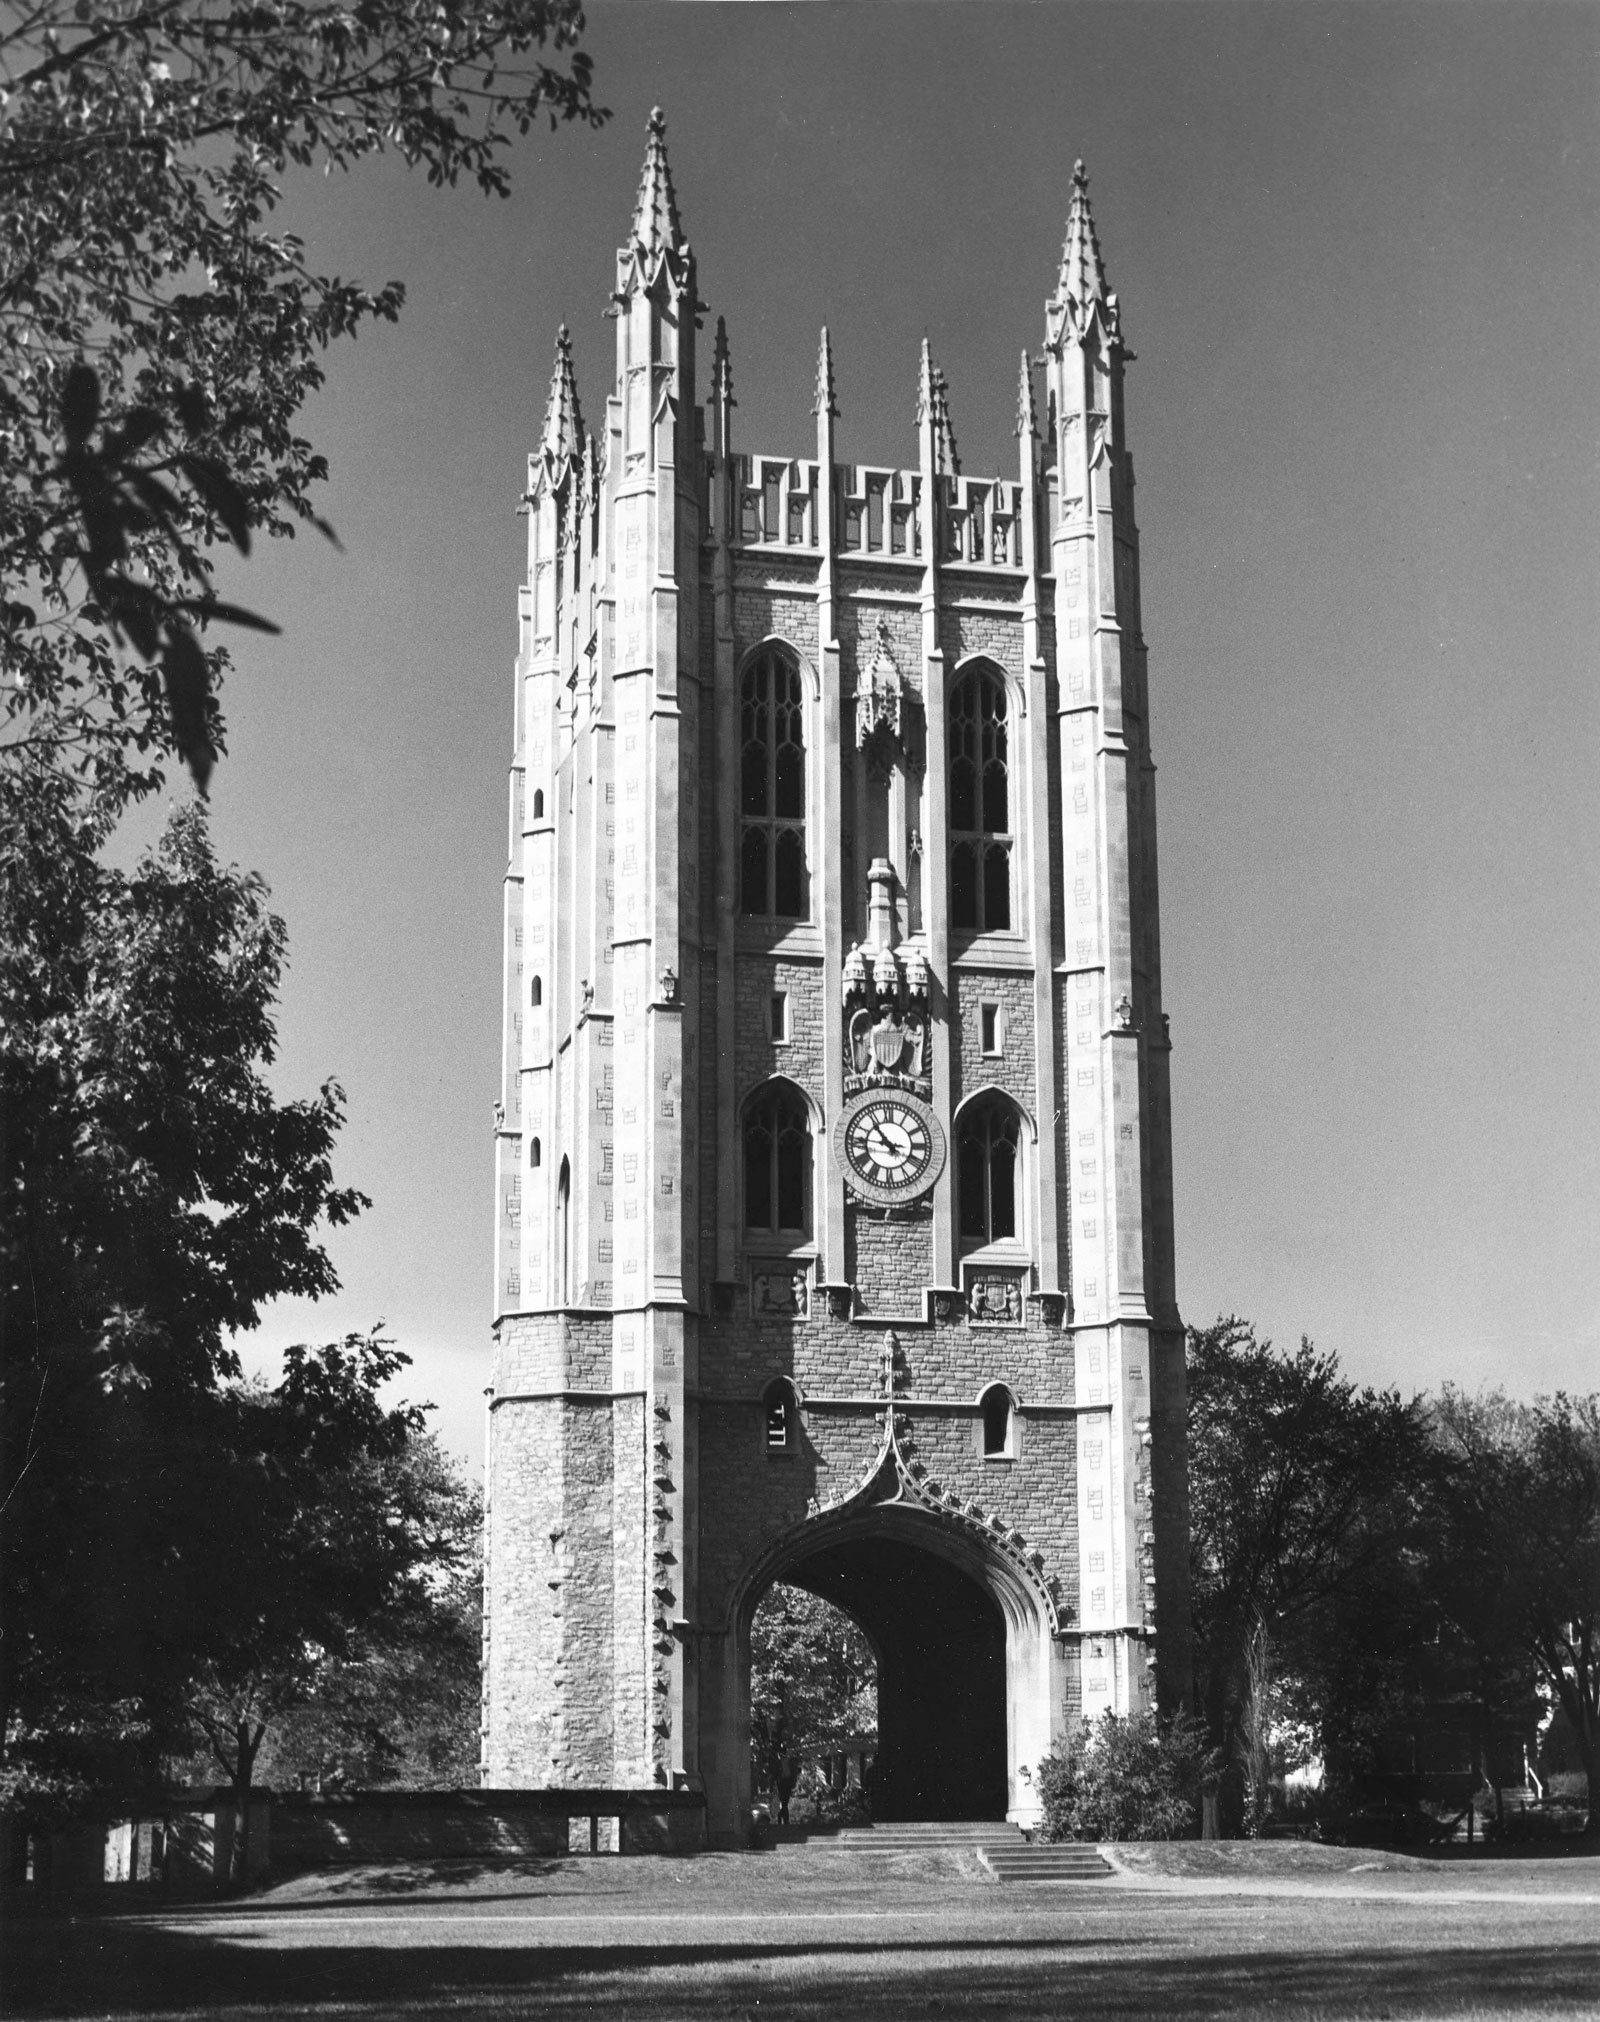 Construction of Memorial Union, 1925-1926 (Courtesy of University of Missouri)